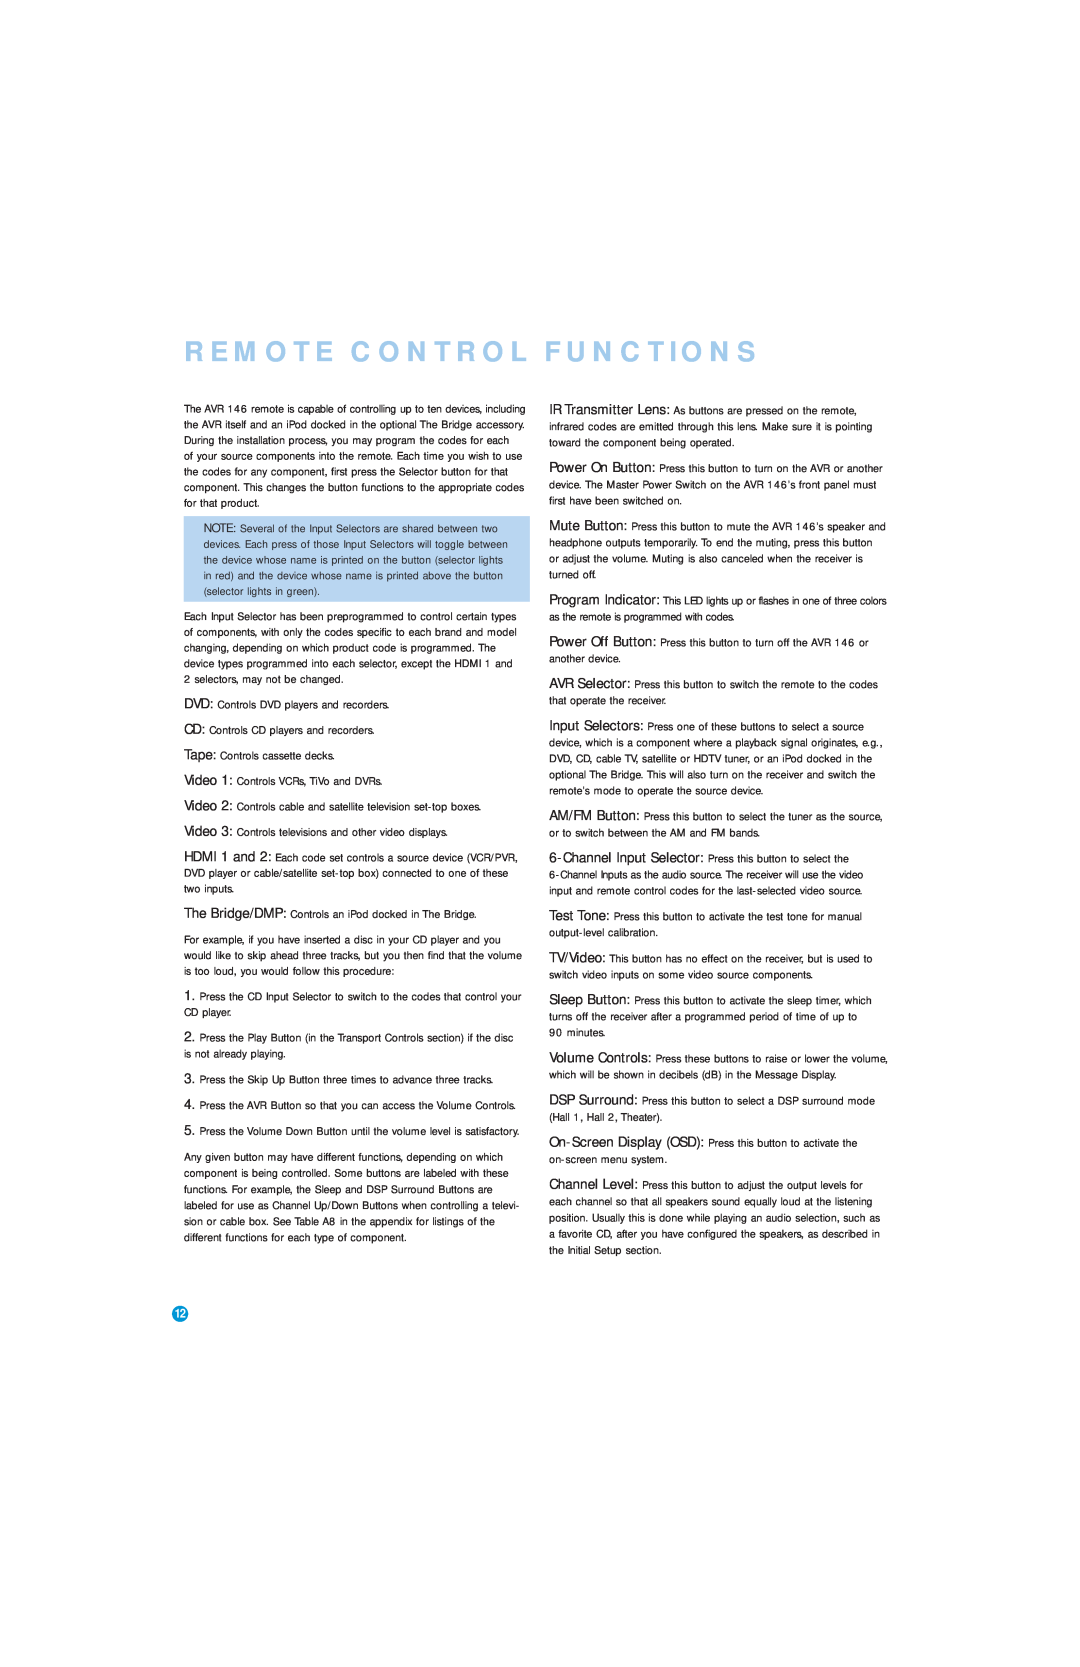 Harman-Kardon AVR 146 owner manual Remote Control Functions 